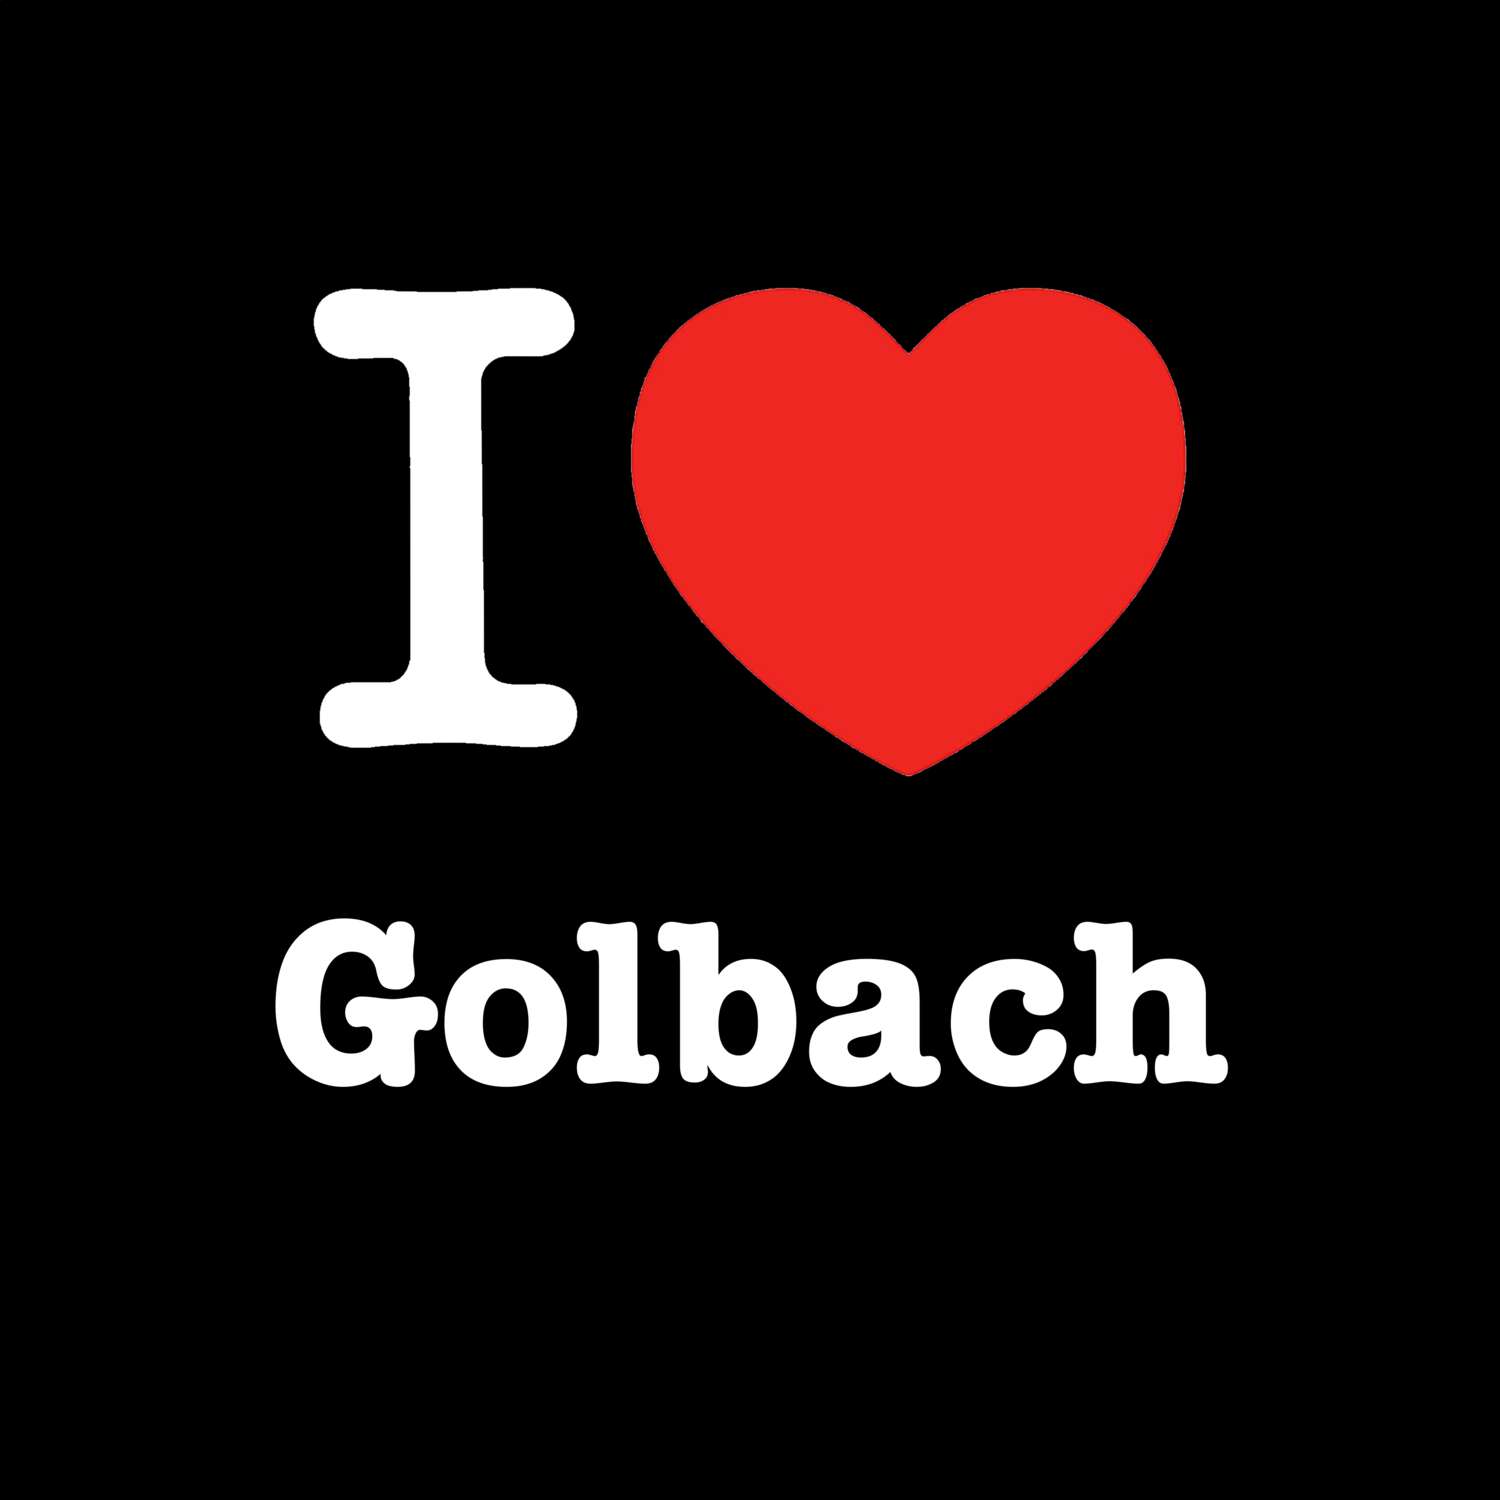 Golbach T-Shirt »I love«